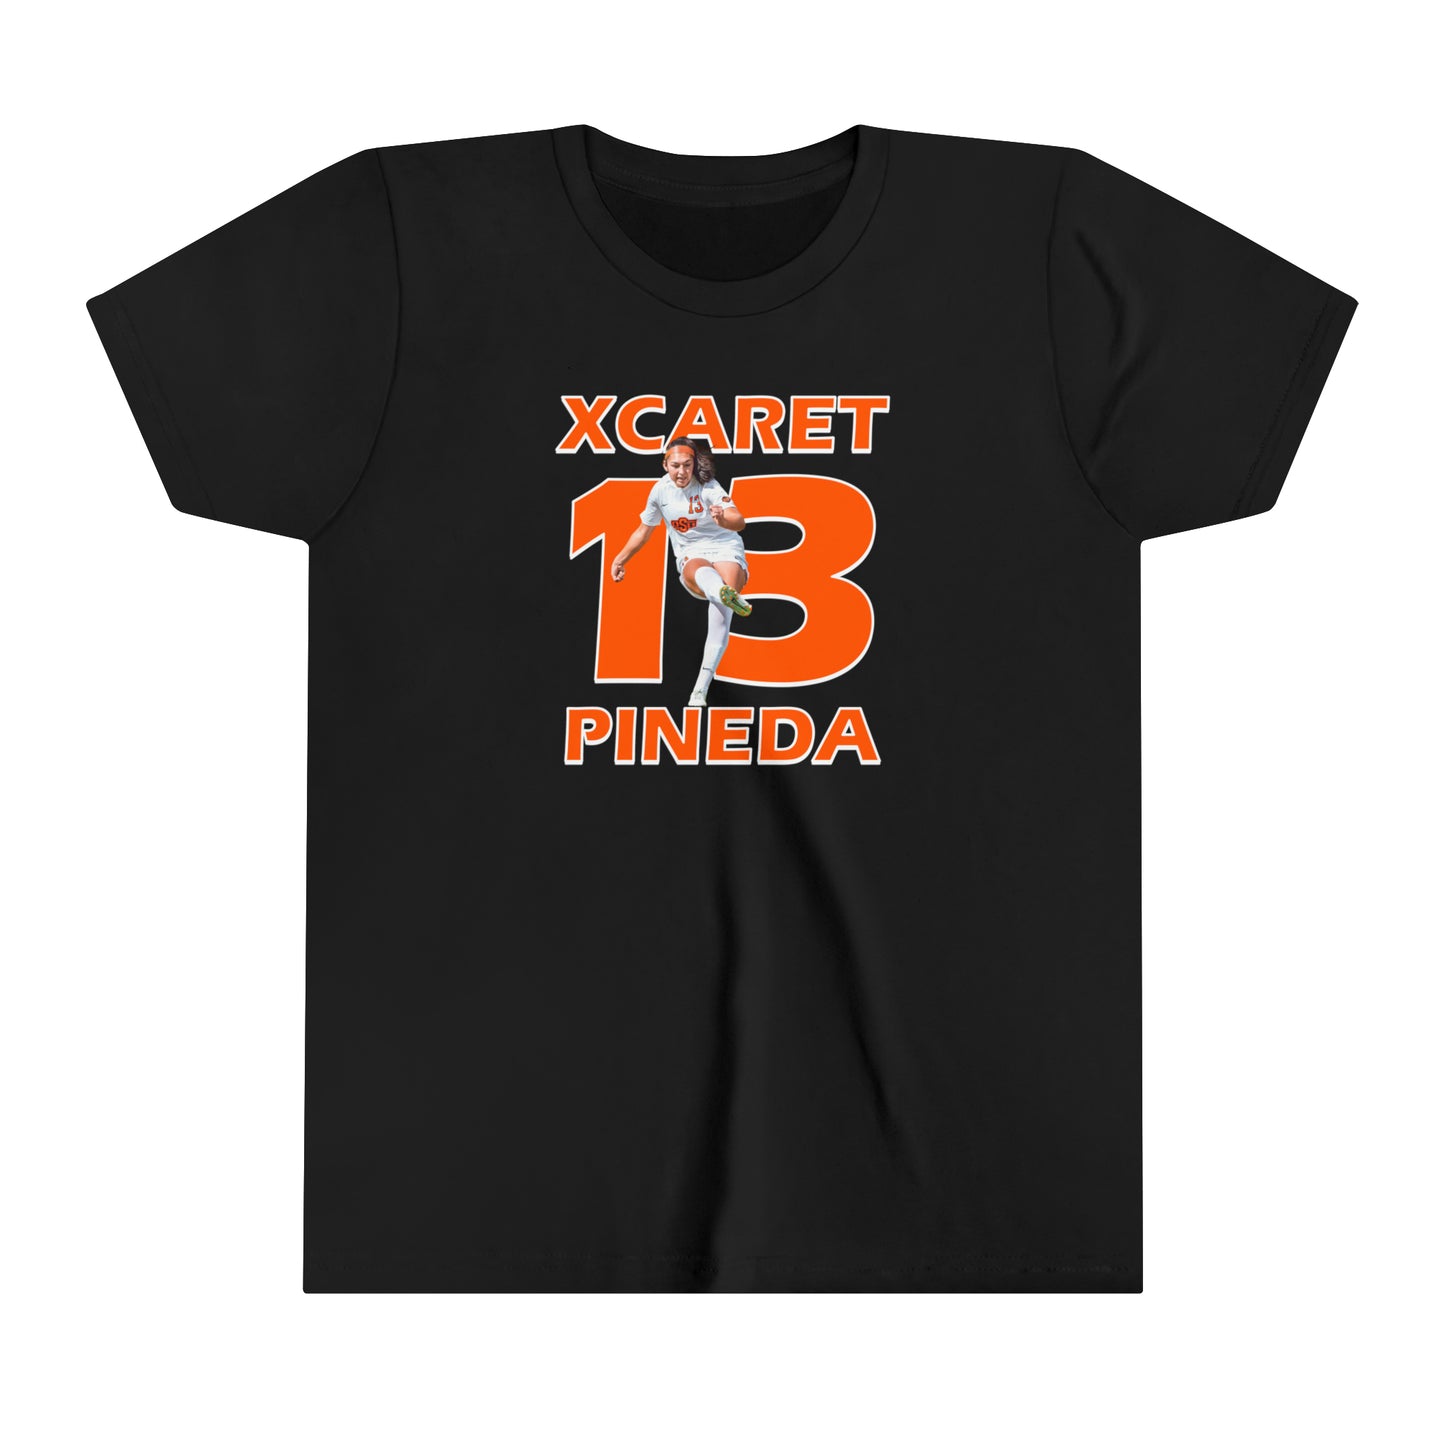 Xcaret Pineda Youth T-Shirt